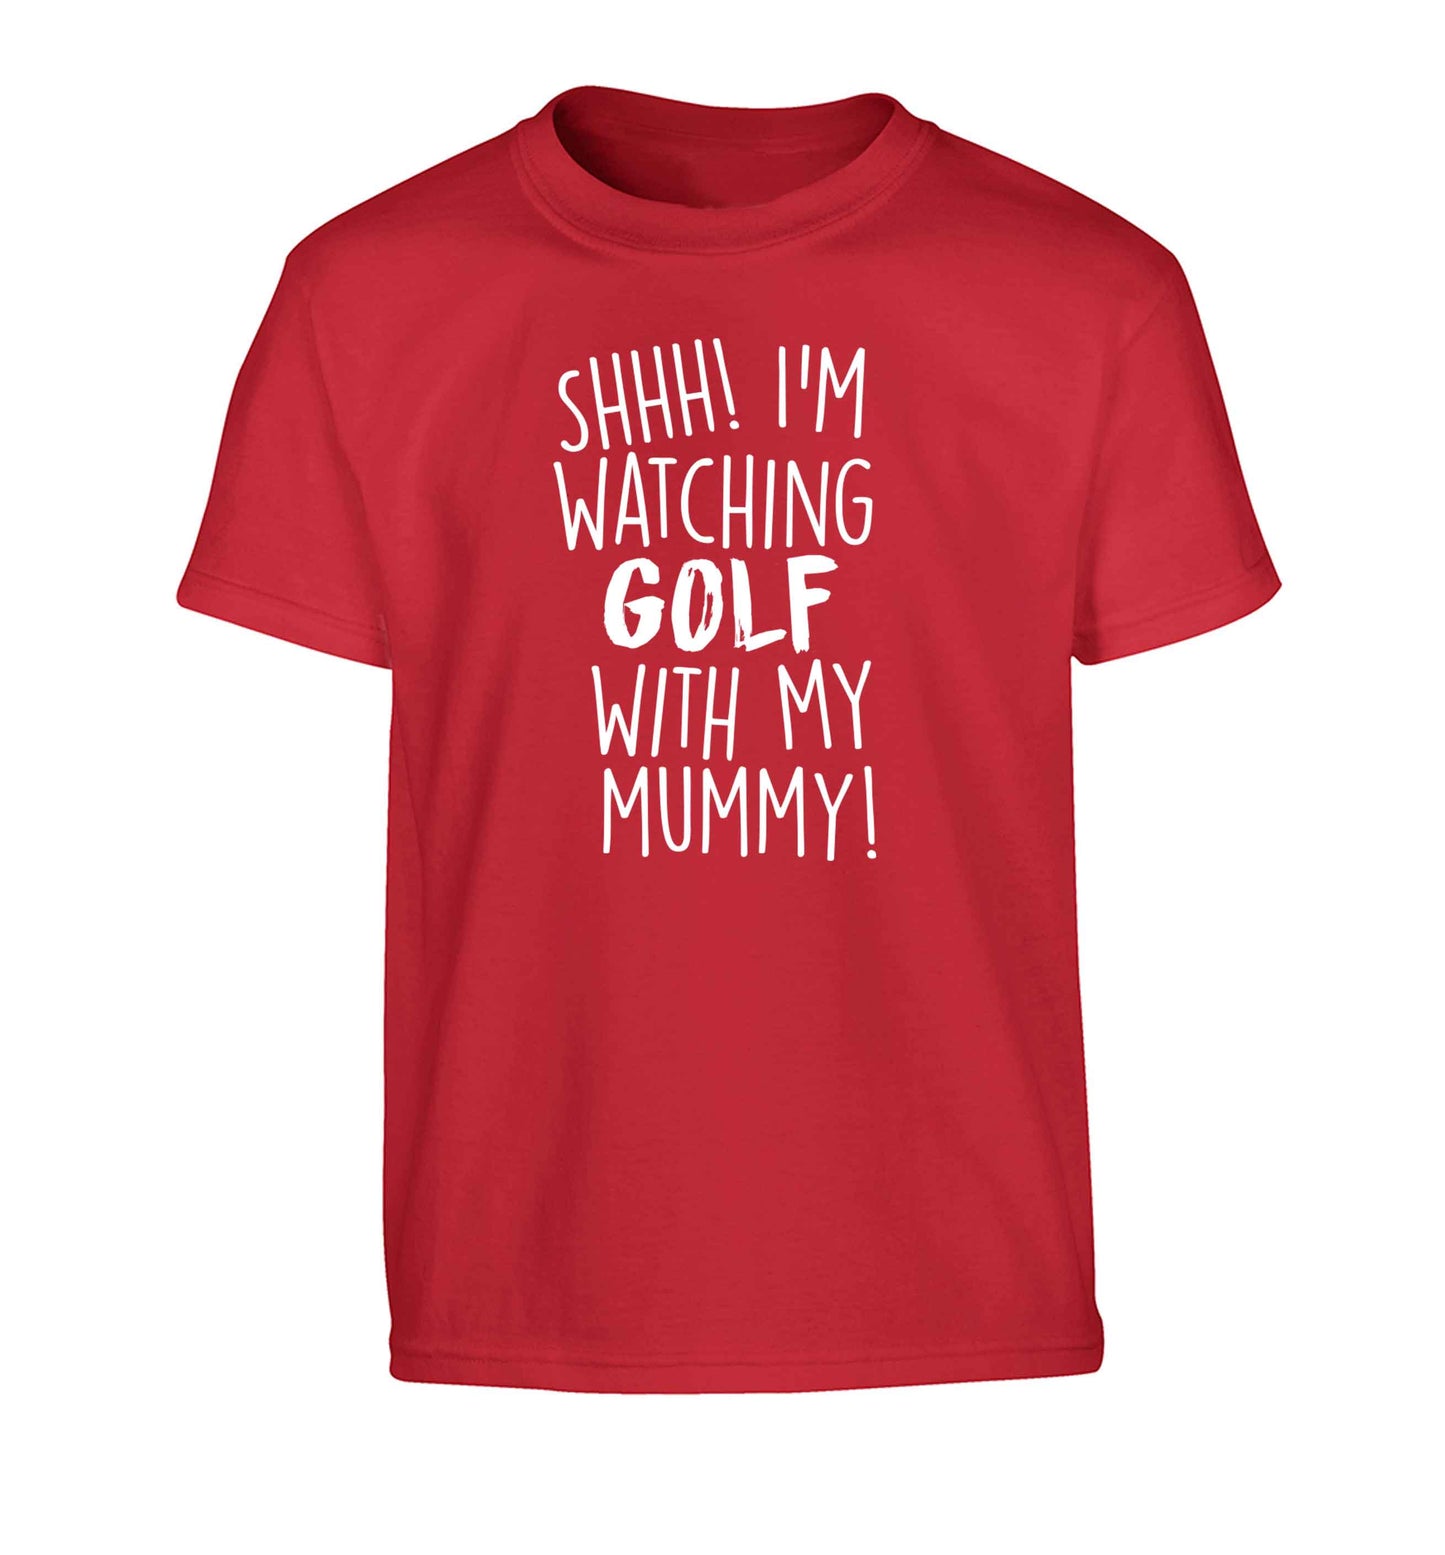 Shh I'm watching golf with my mummy Children's red Tshirt 12-13 Years